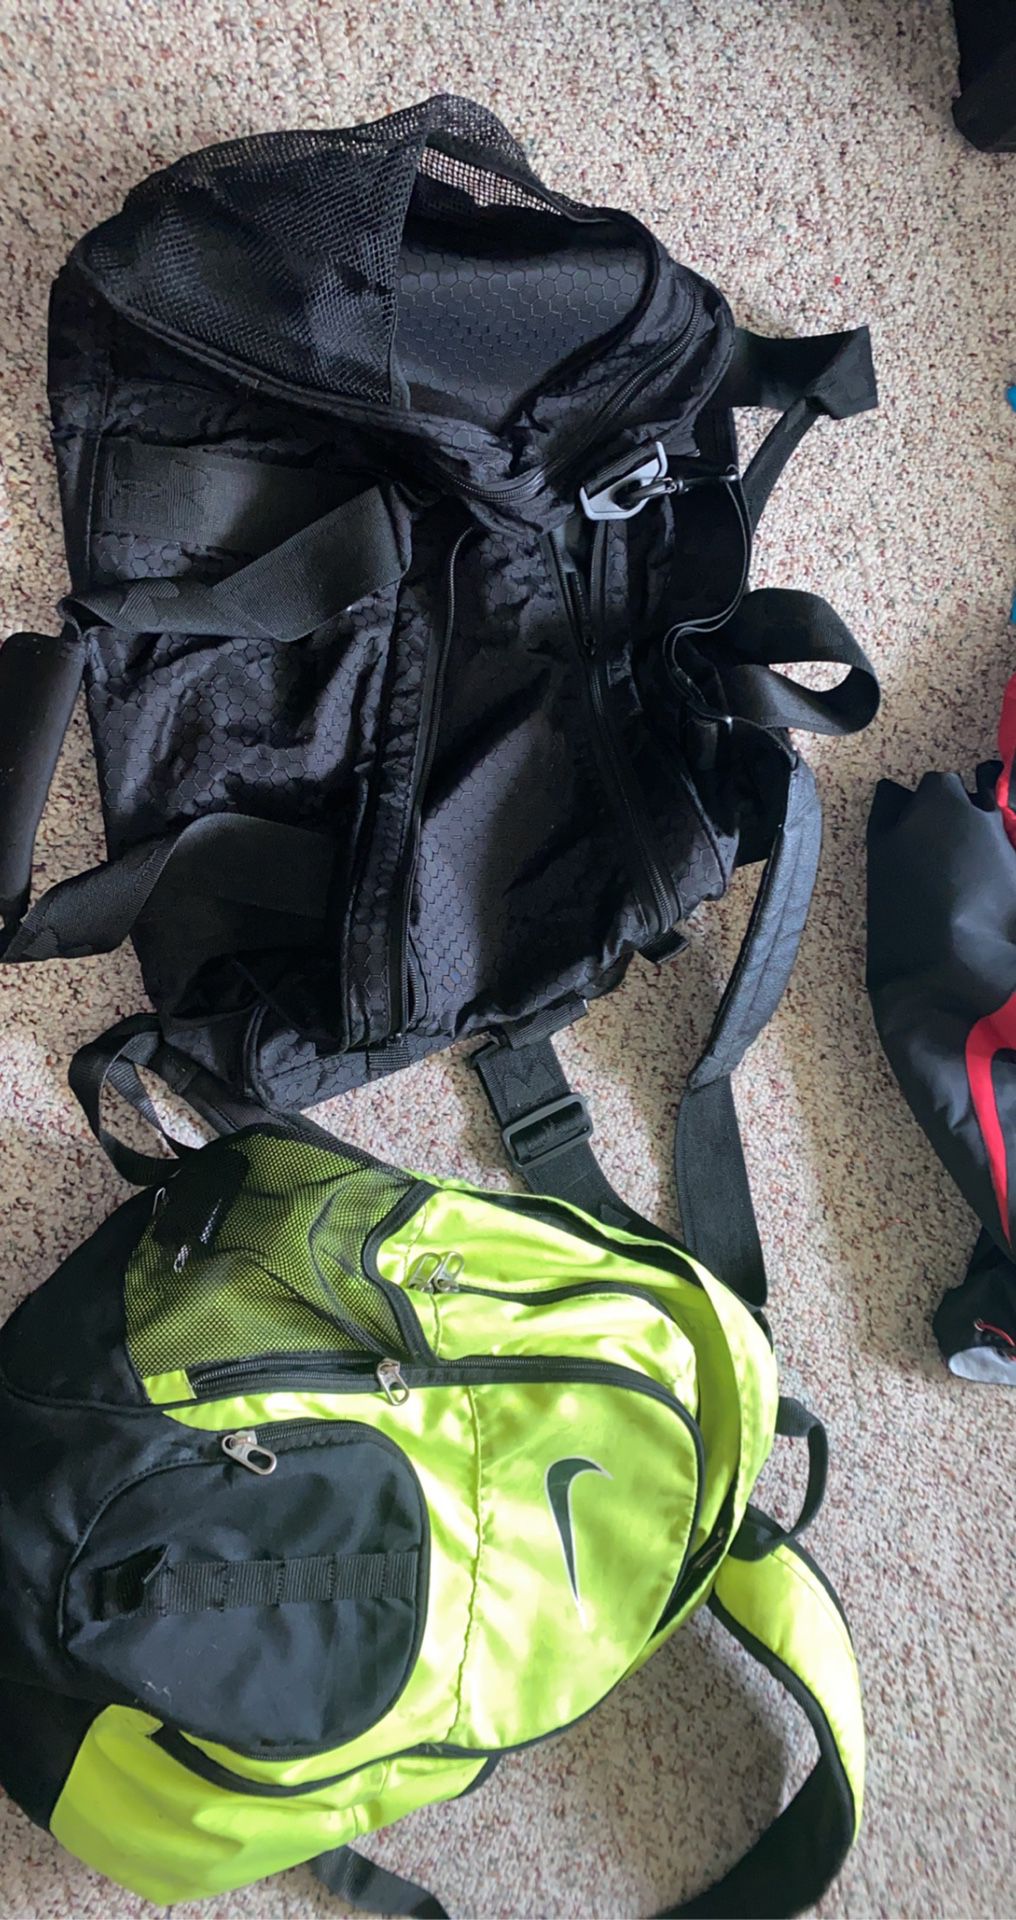 Under Armor Duffle Bag And Nike Bag